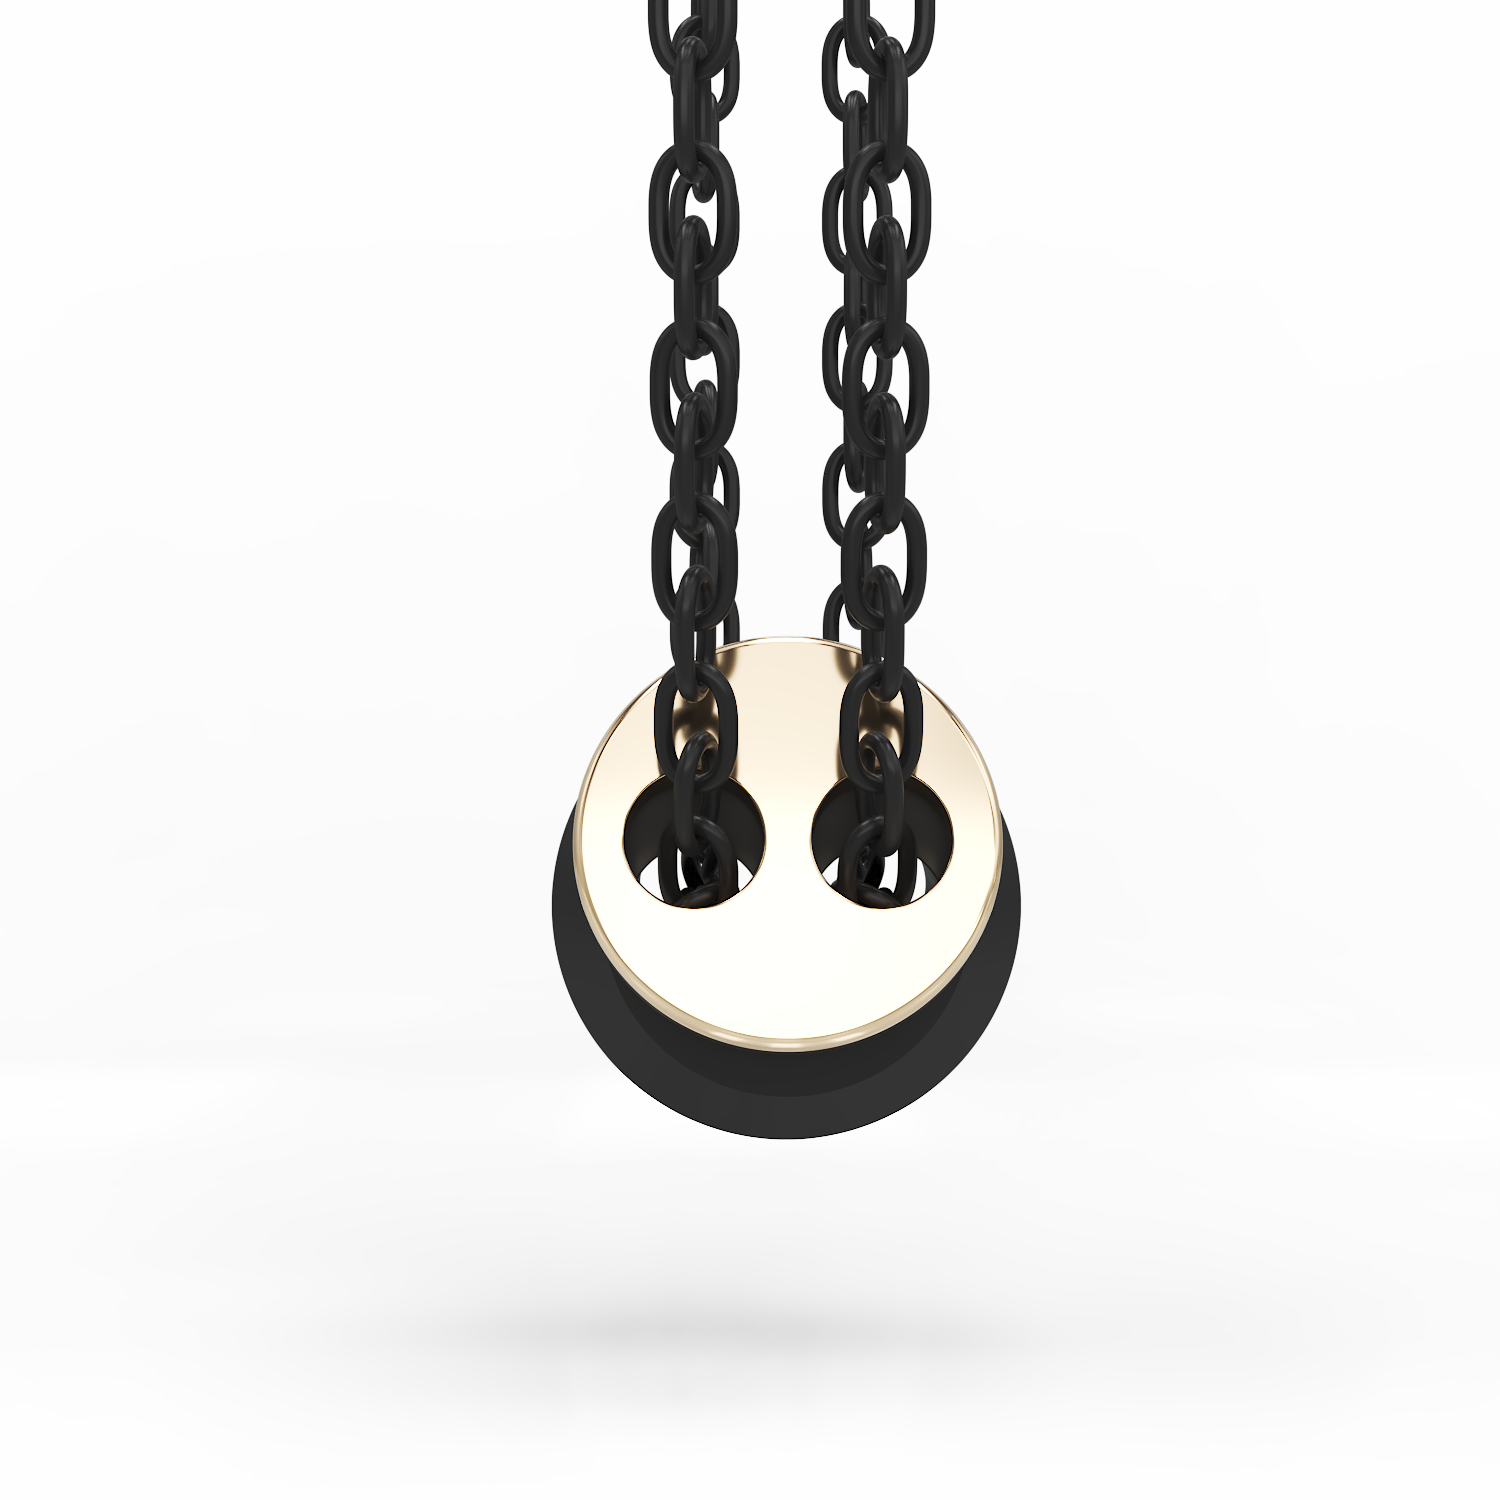 Double Skyline Black pendant necklace